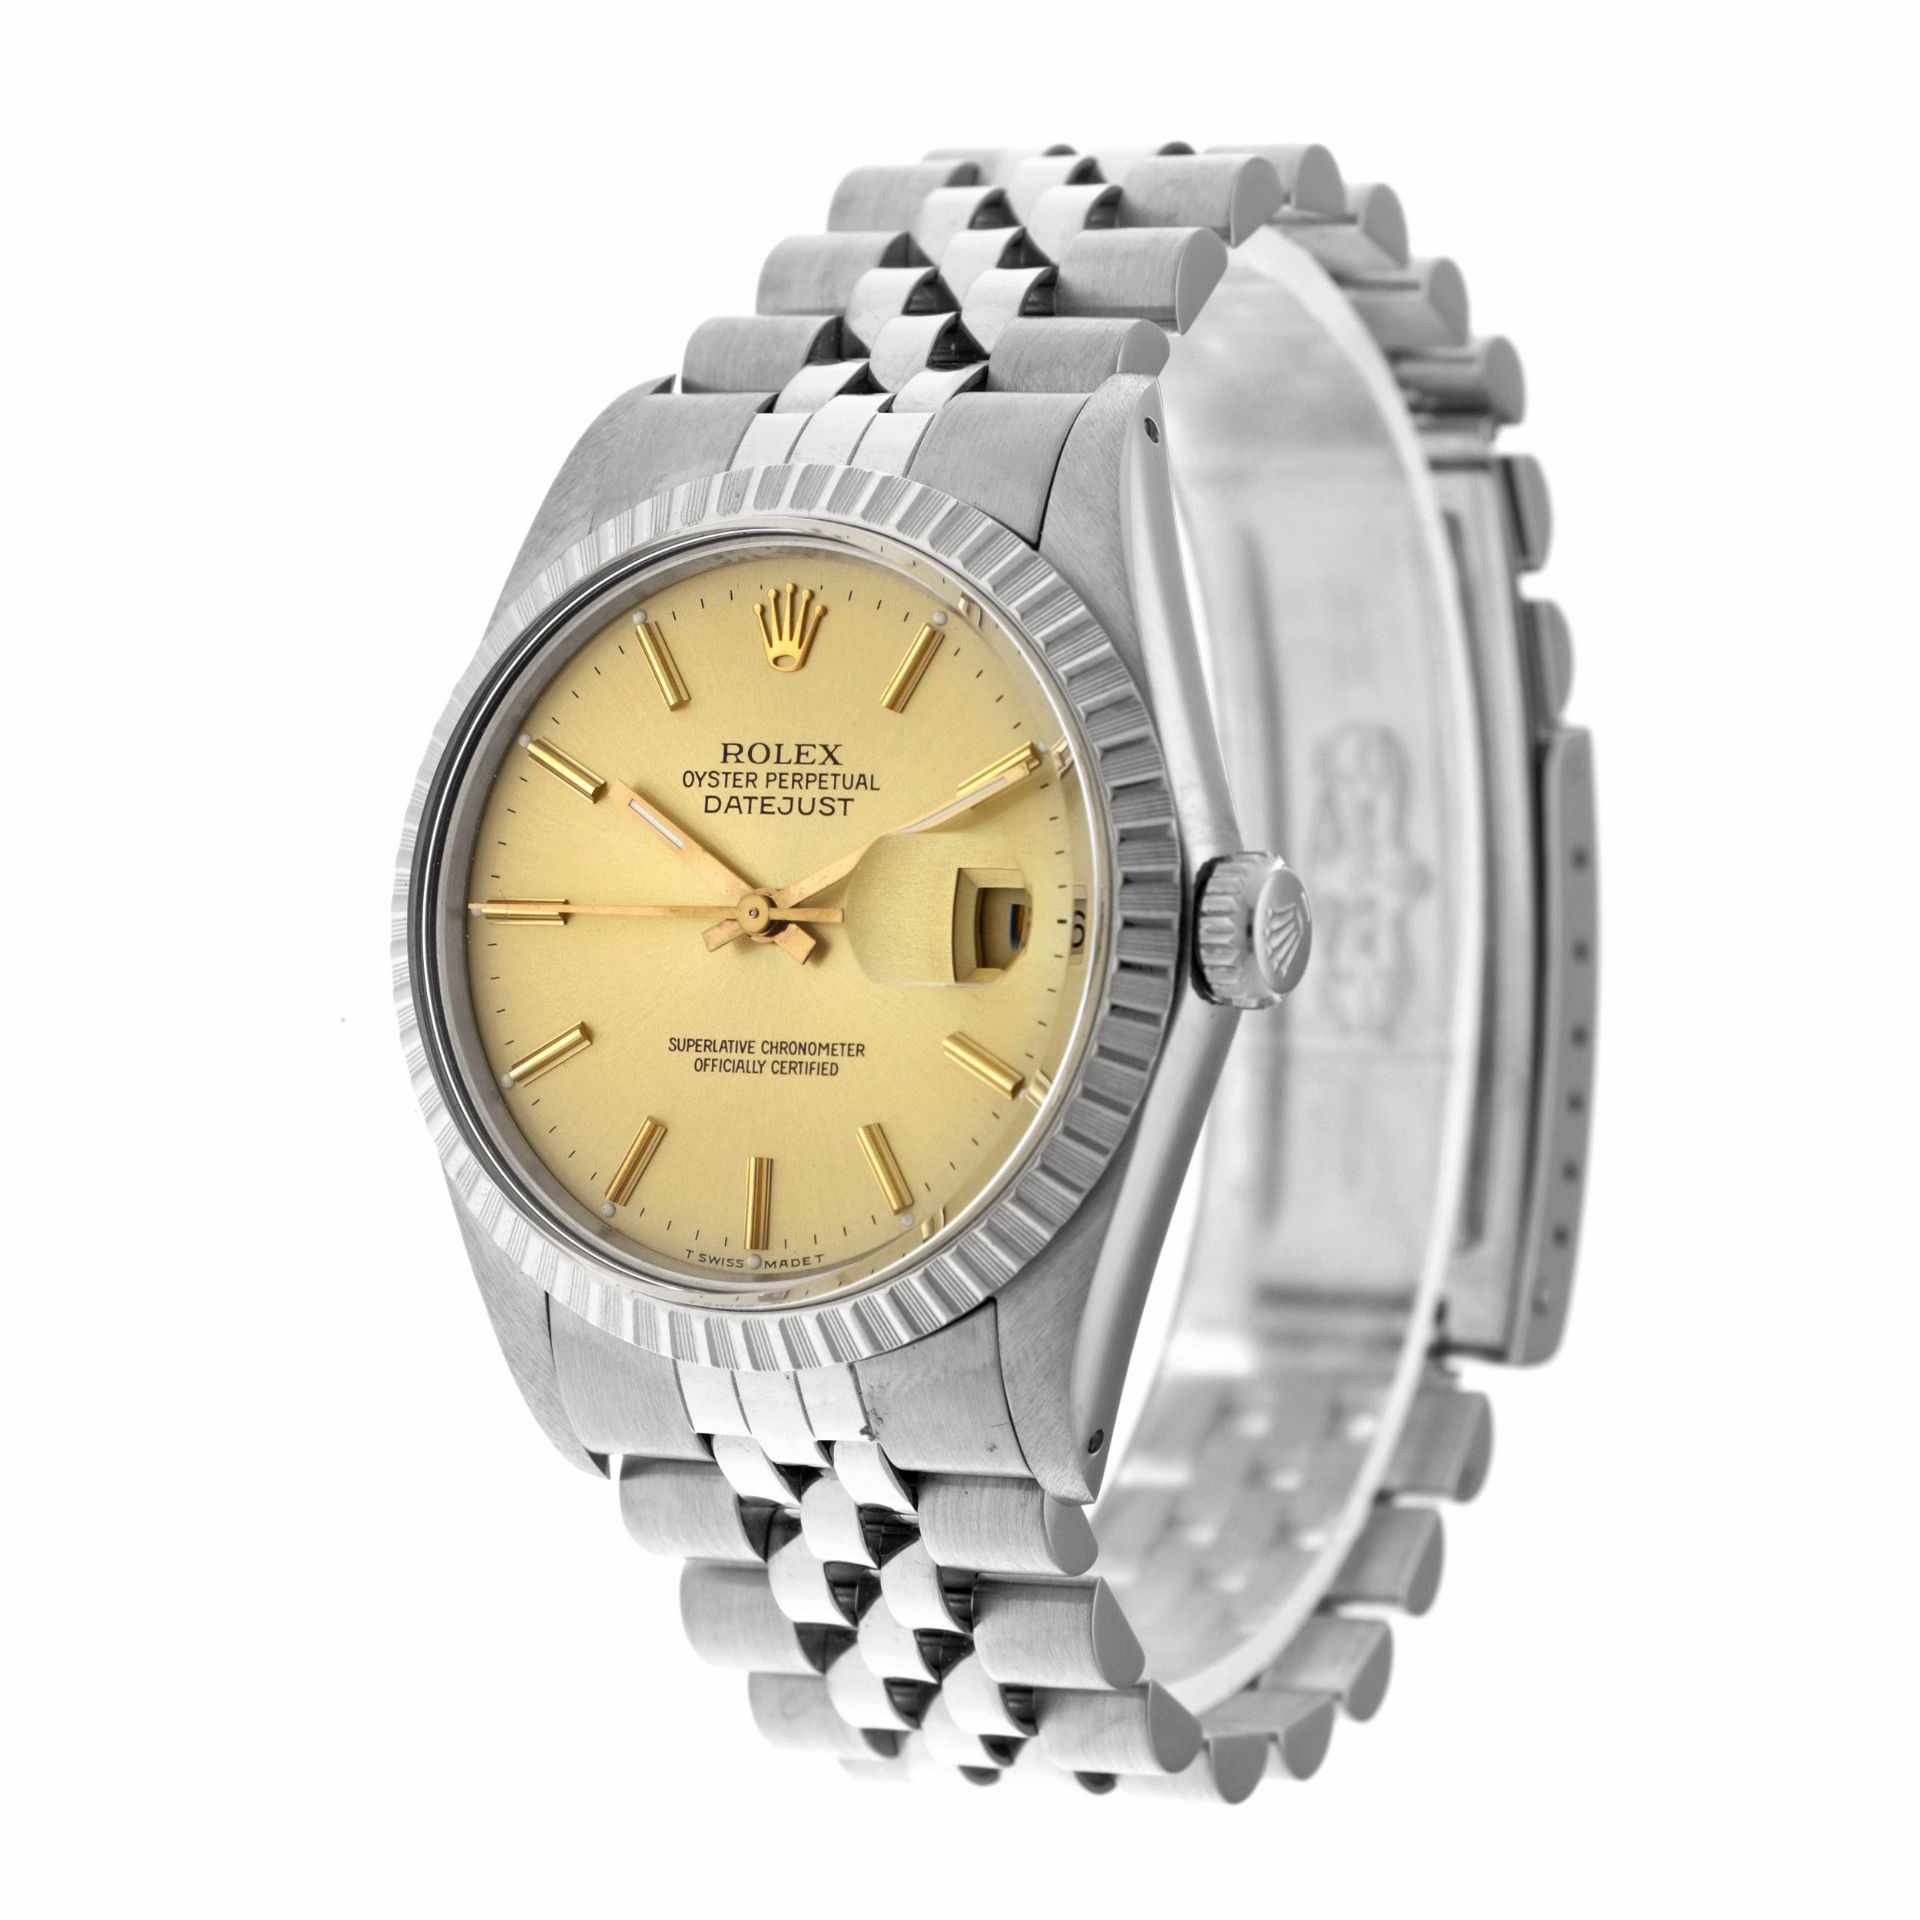 Rolex Datejust 16030 - Men's wrist watch - approx. 1987. - Image 3 of 5